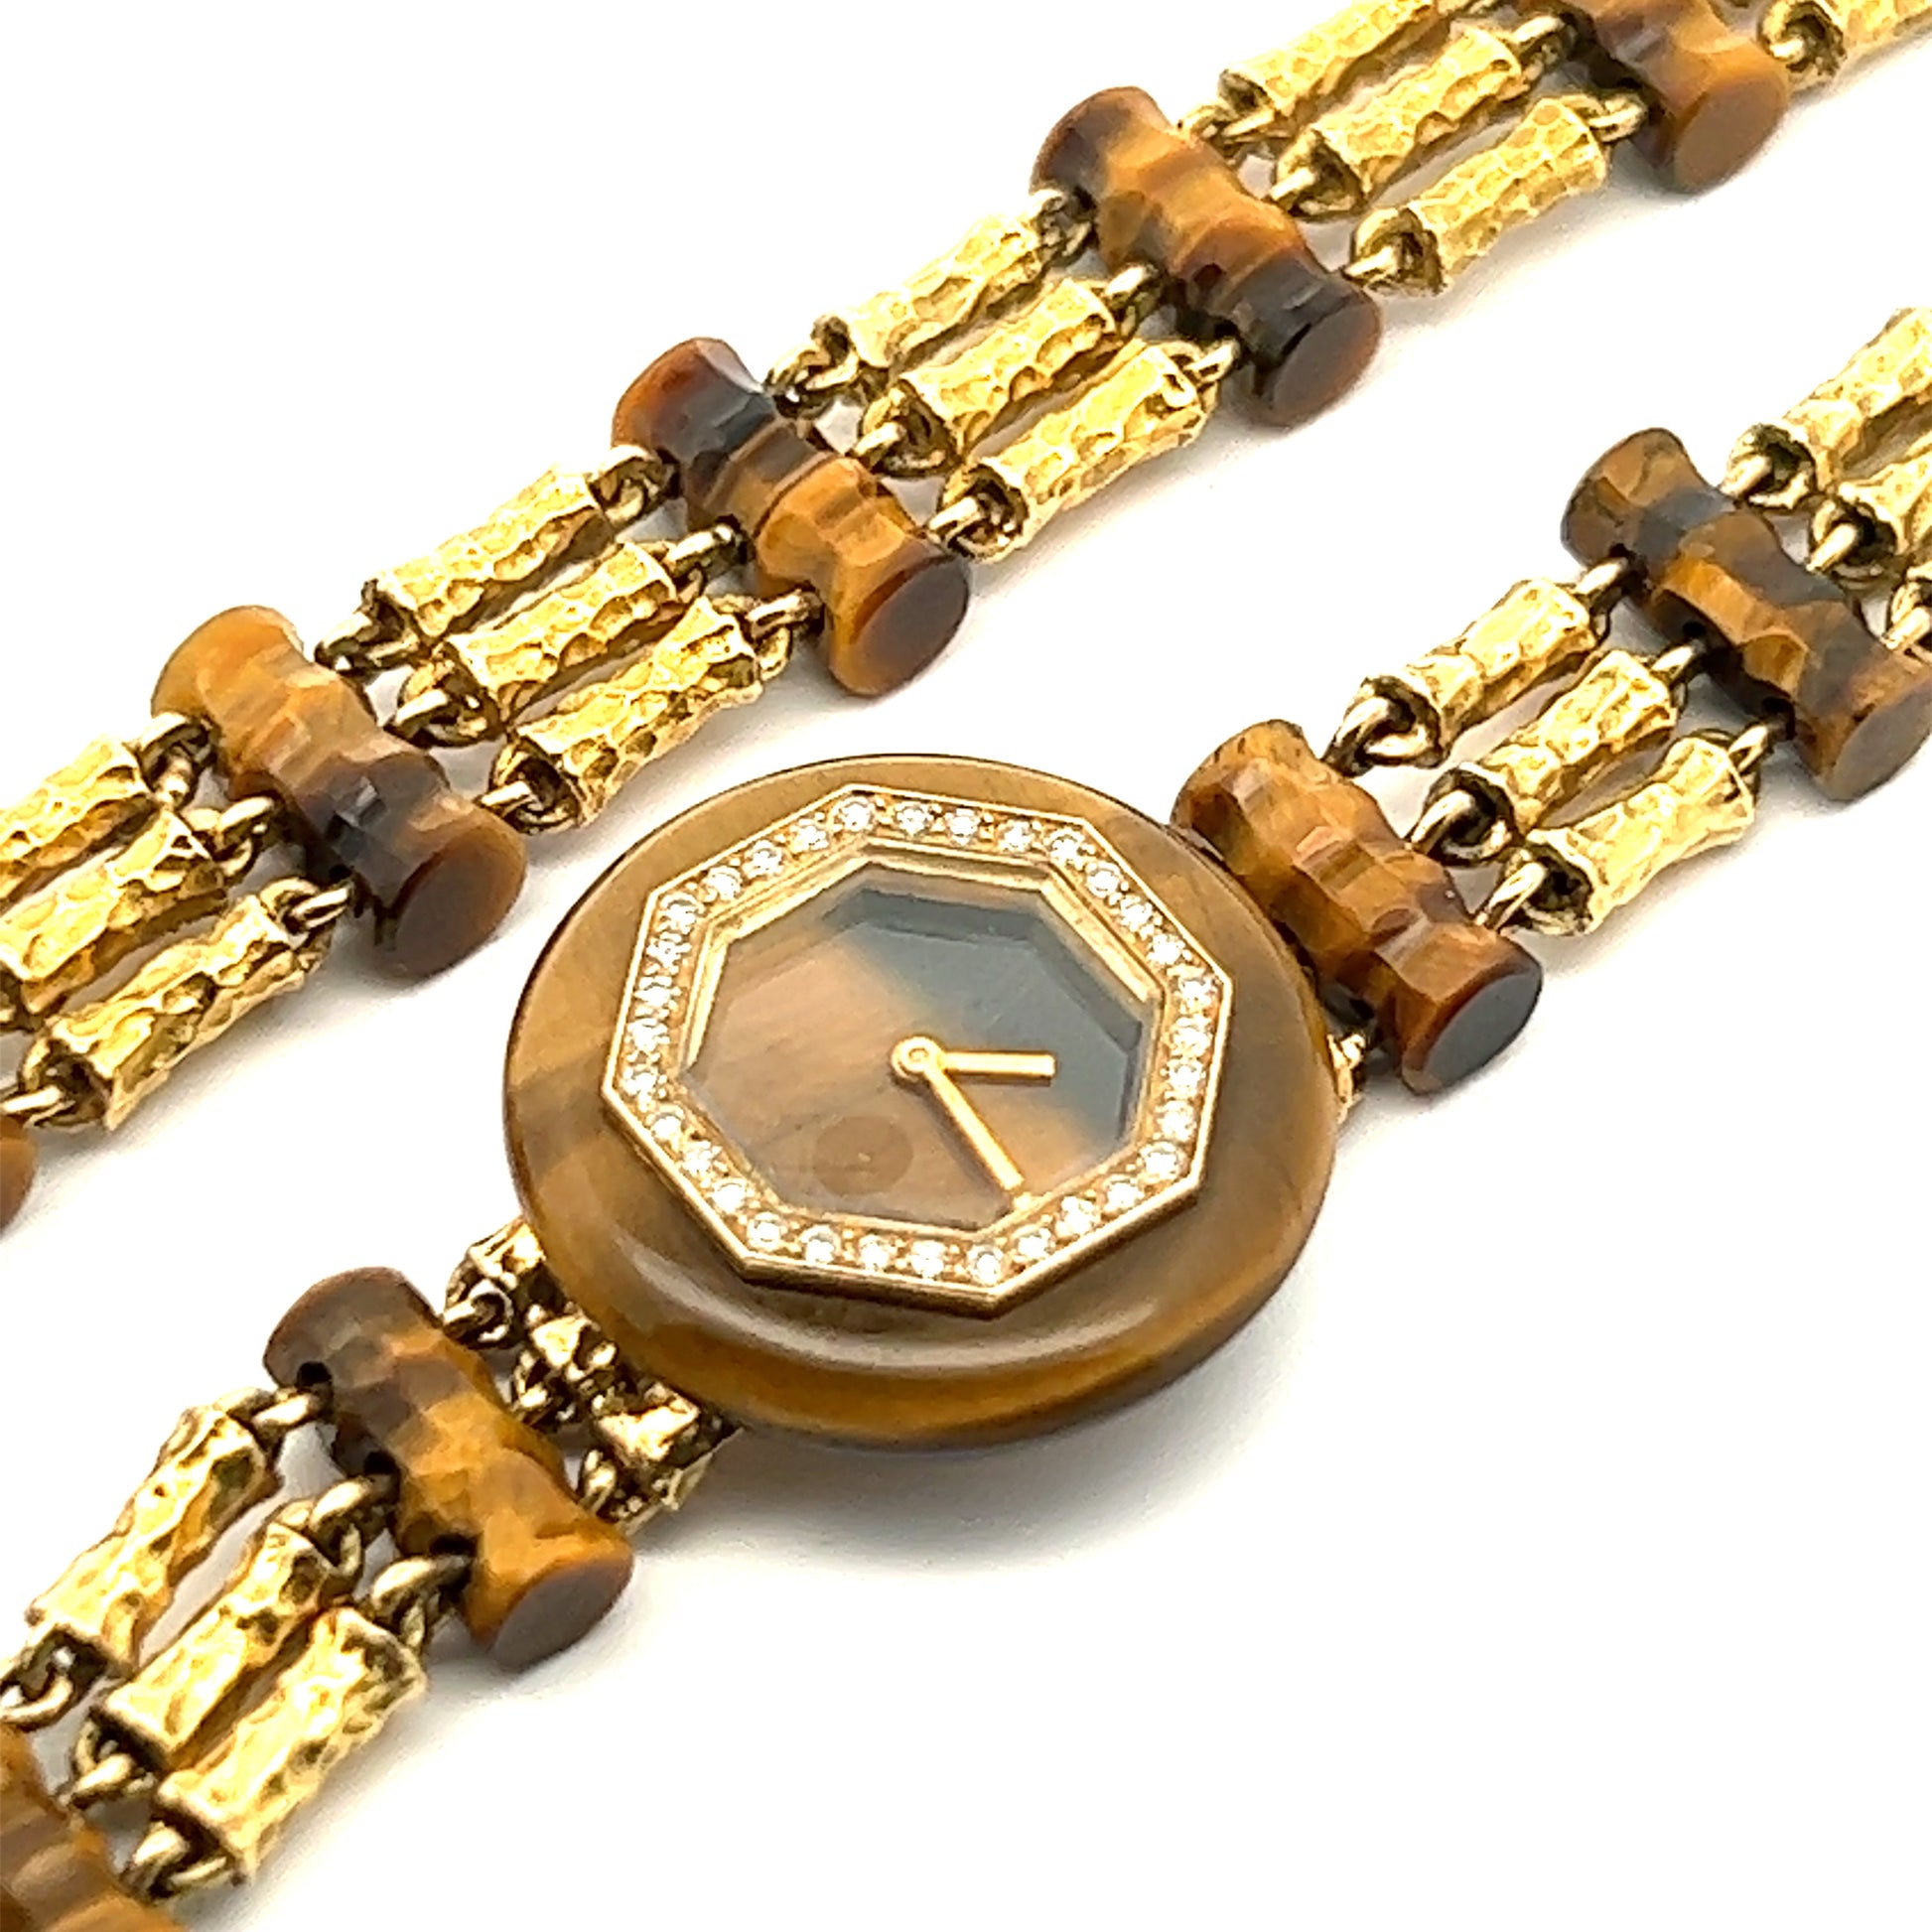 Boucheron Paris 1950s 18KT Yellow Gold Tiger's Eye & Diamond Bracelet Watch close-up front